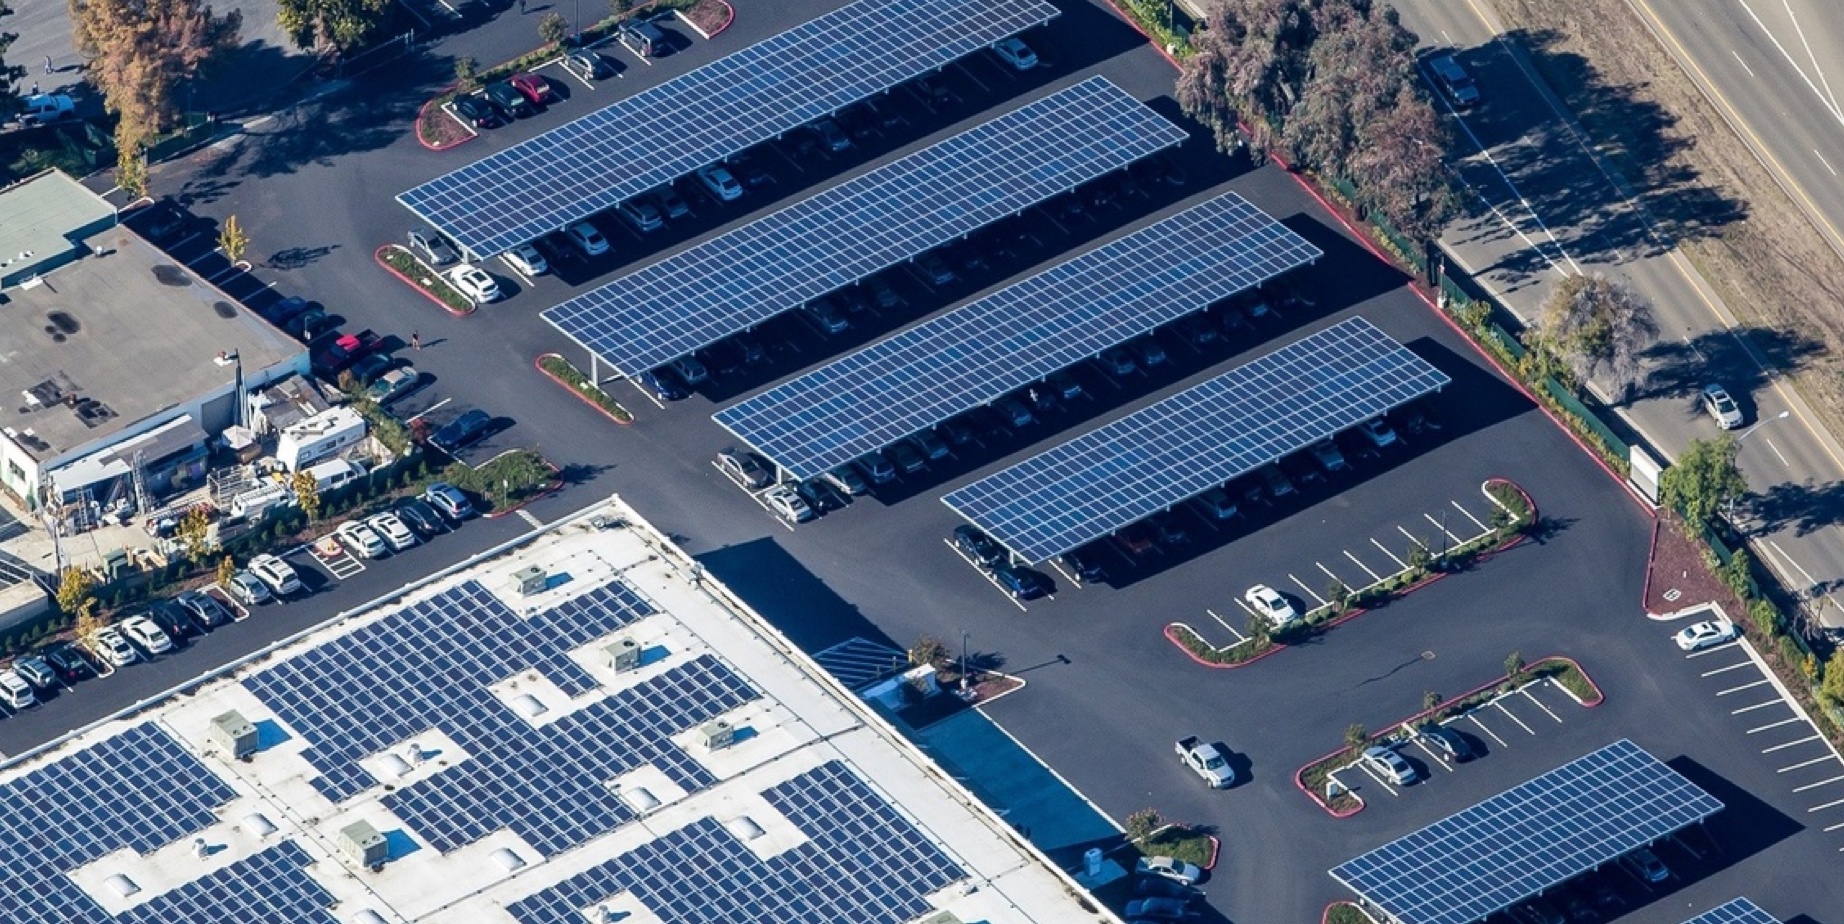 PV Solar Carports South Africa